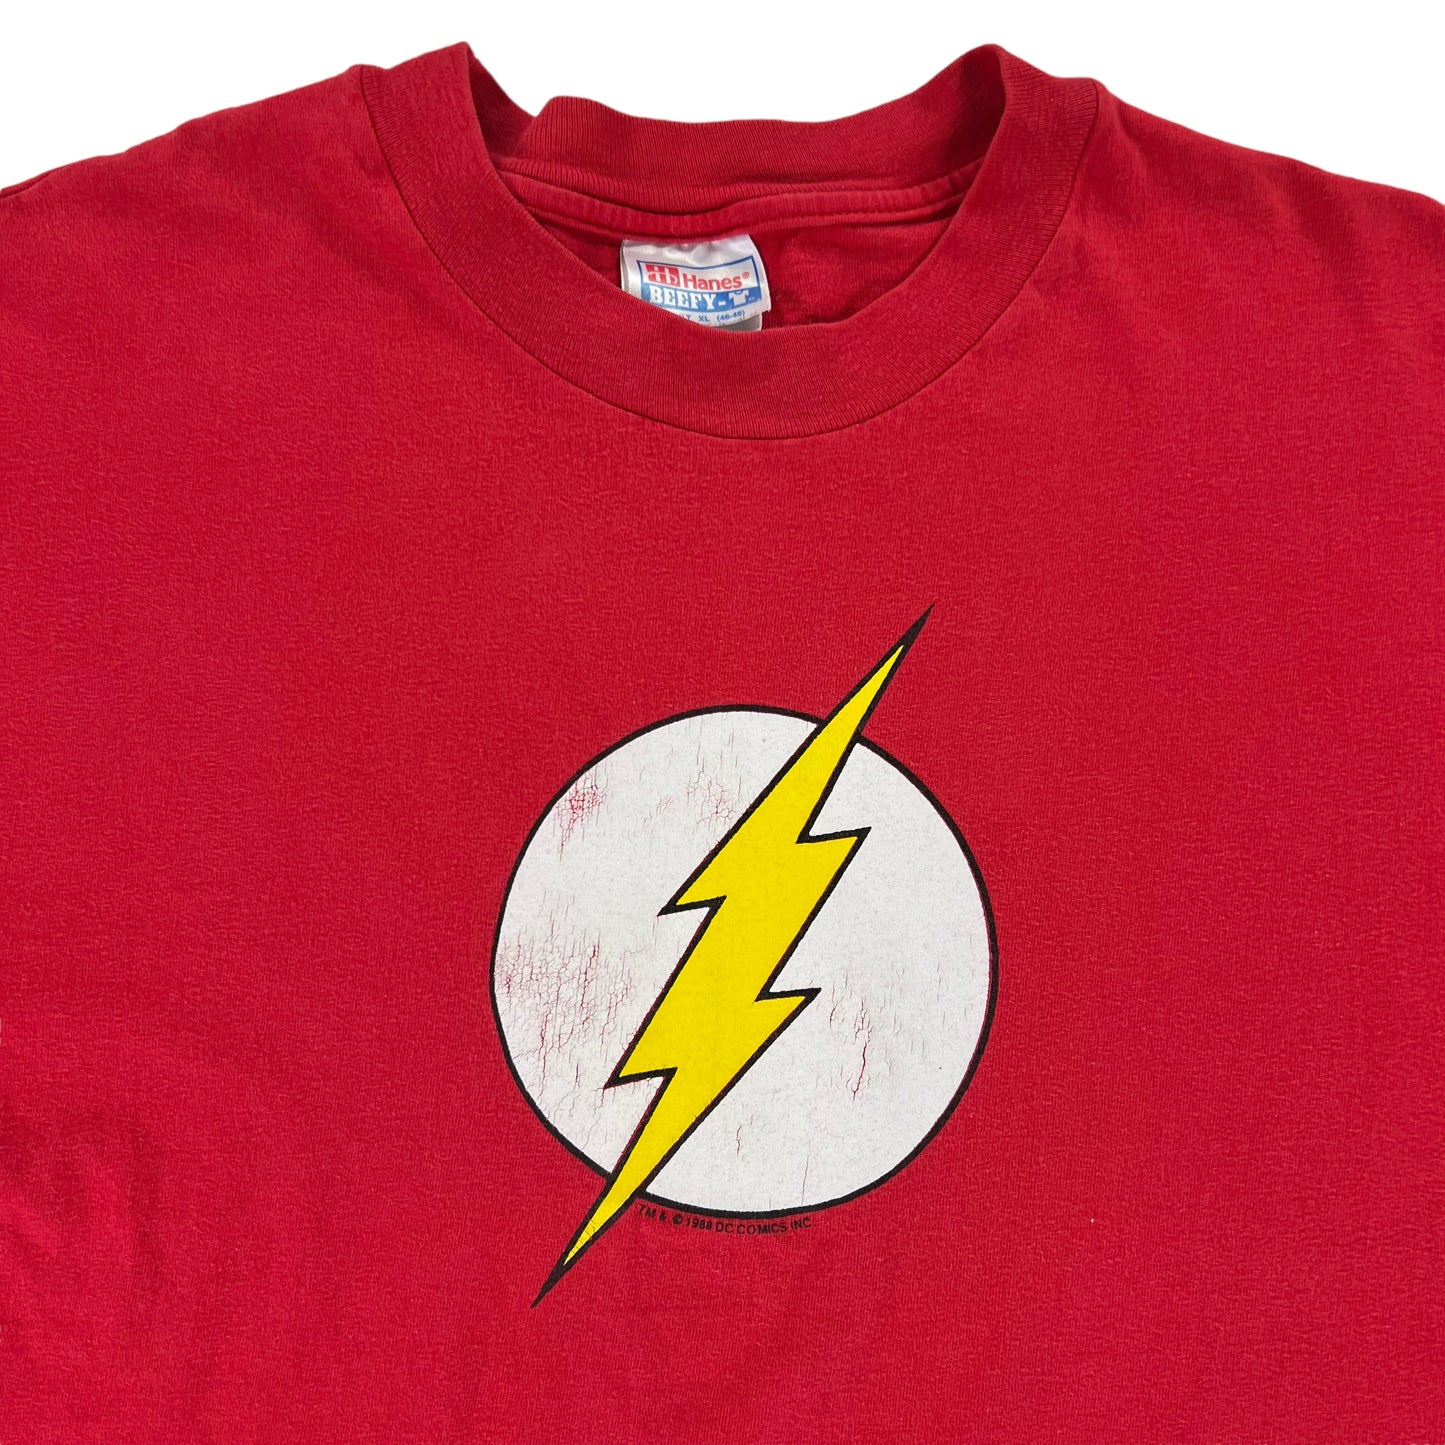 Vintage 90s Hanes The Flash DC comics super hero long sleeve tee (XL)